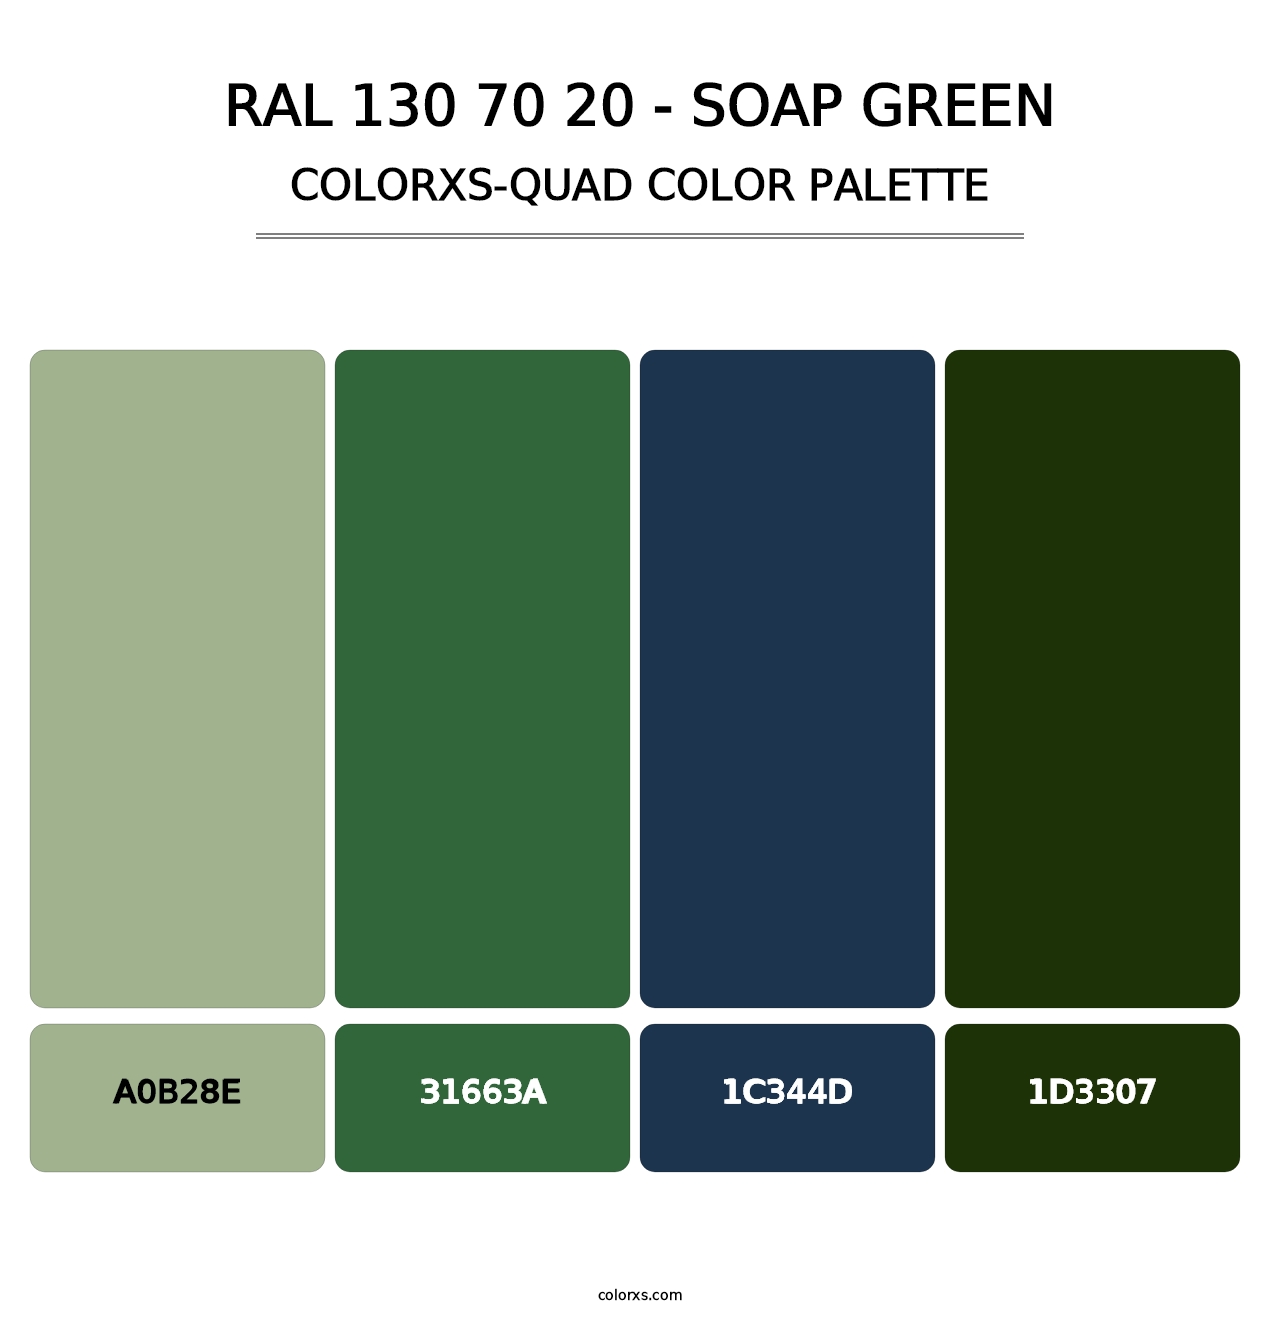 RAL 130 70 20 - Soap Green - Colorxs Quad Palette